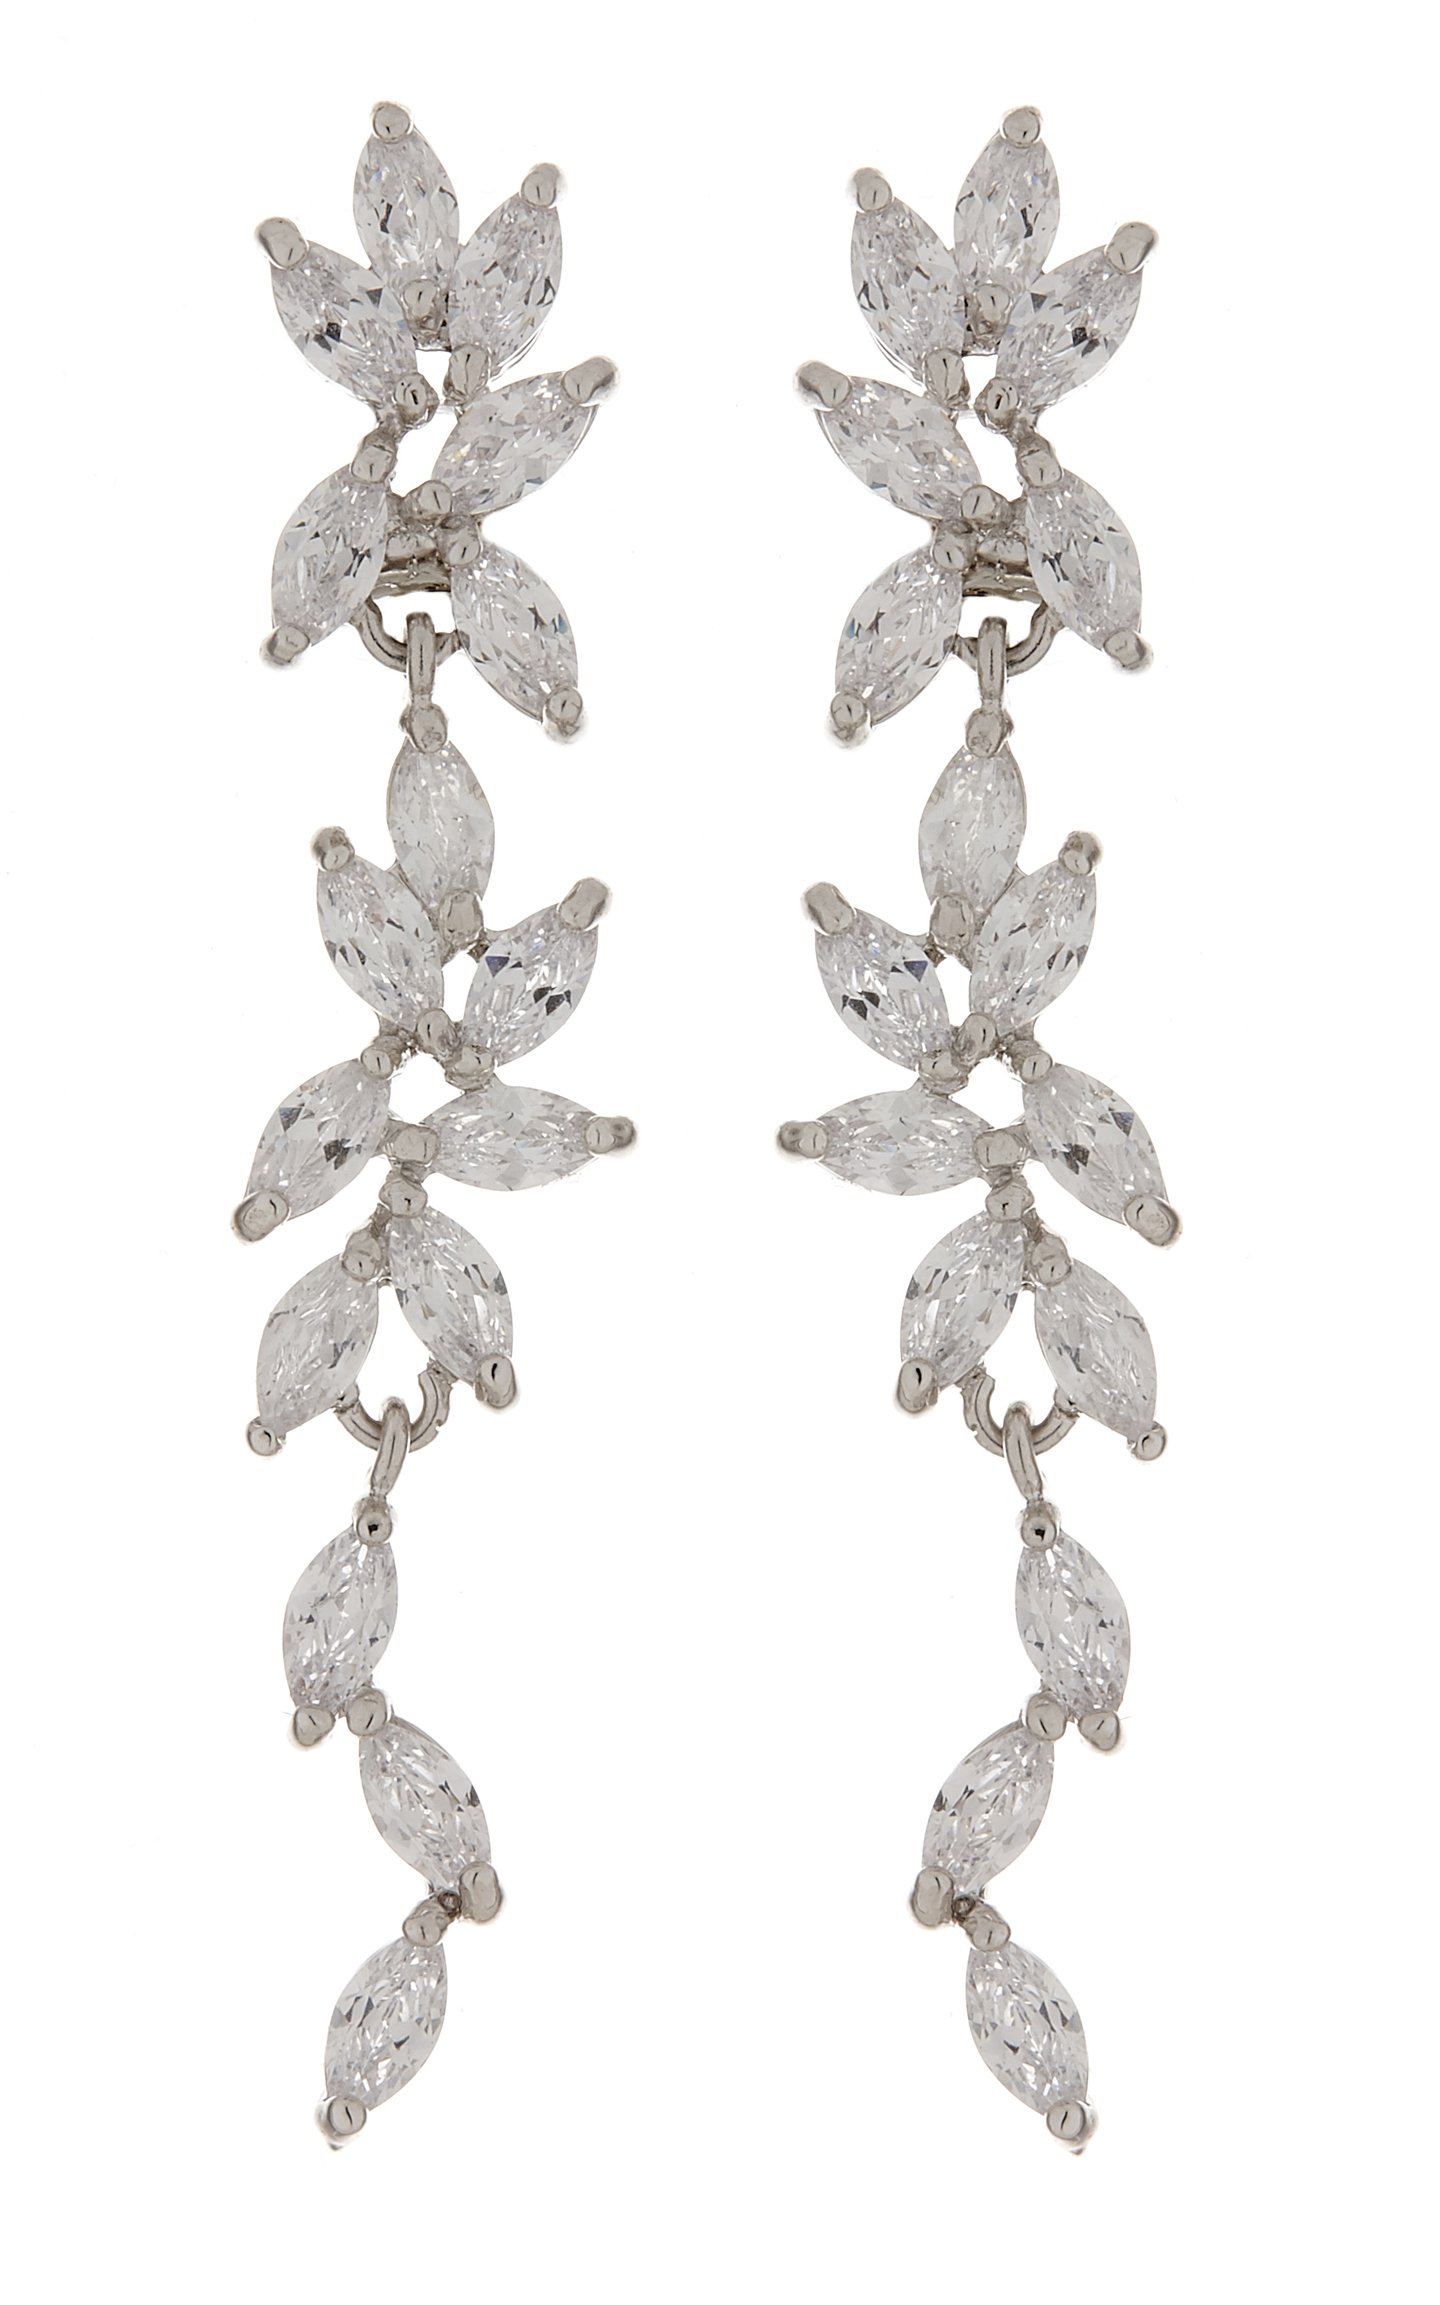 Clip On Earrings - Alison - silver luxury earring with clear cubic zirconia stones